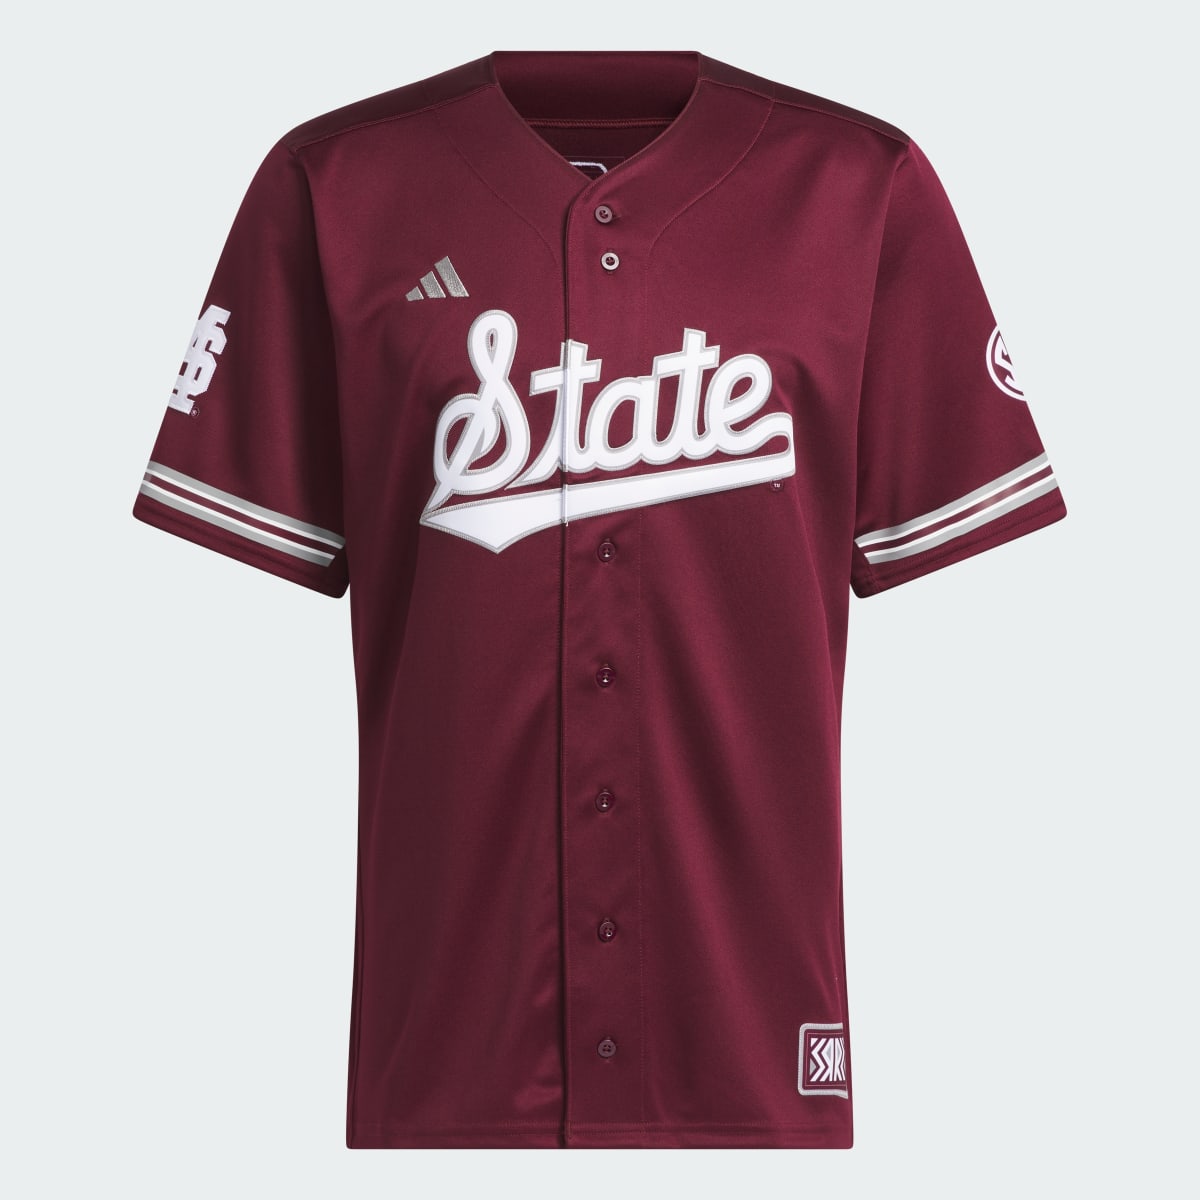 Adidas Mississippi State Reverse Retro Replica Baseball Jersey. 5